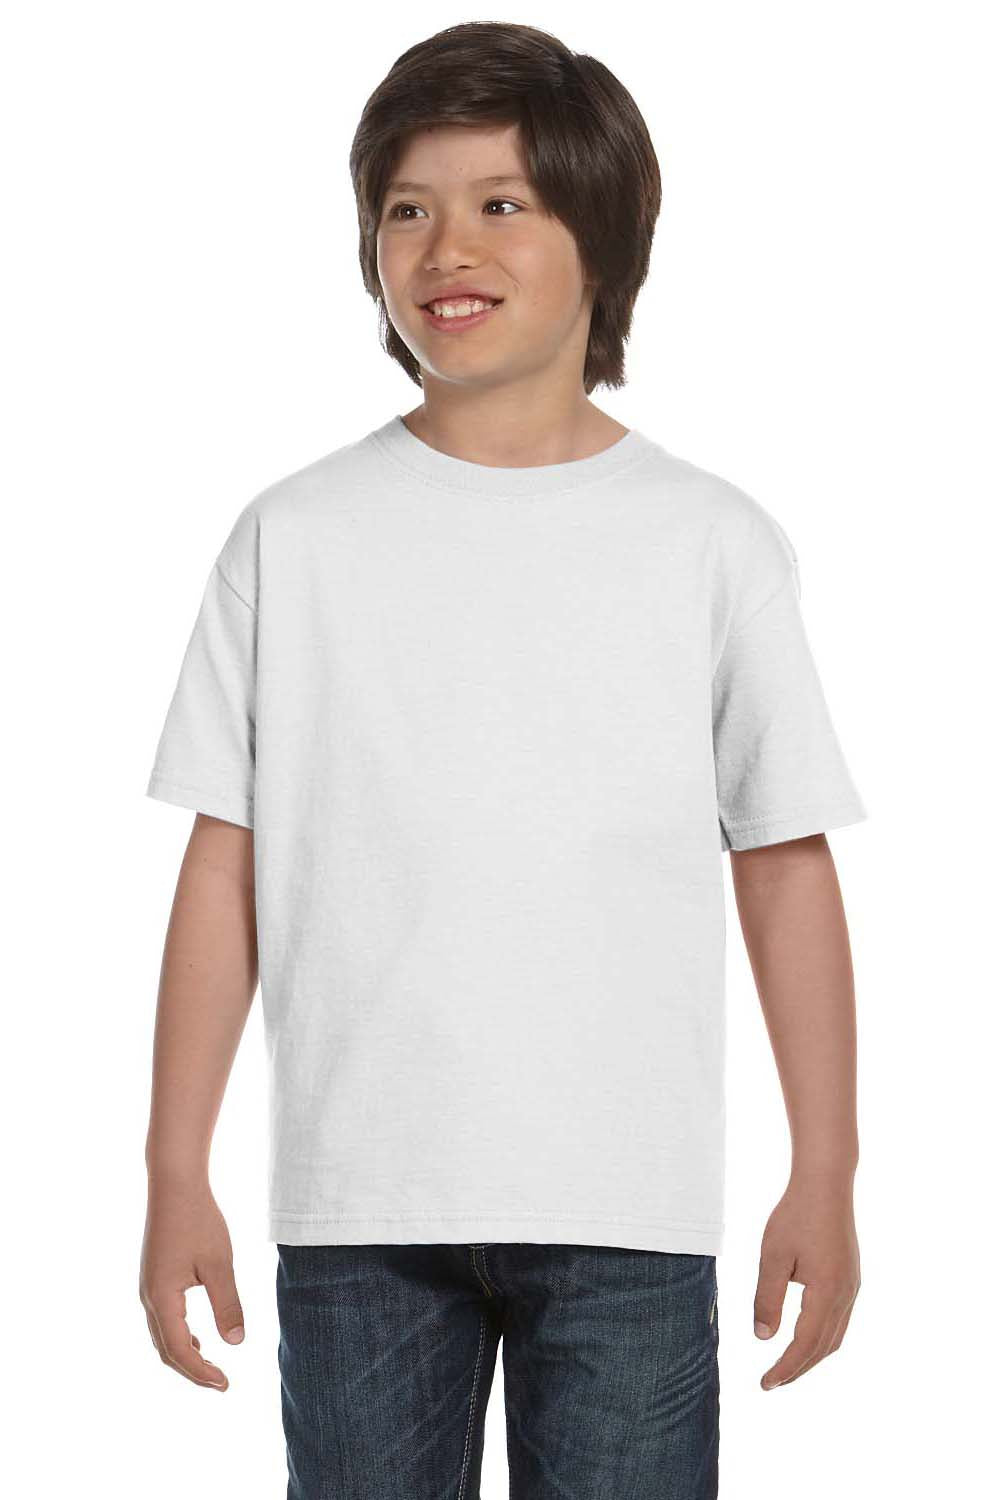 Gildan G800B Youth DryBlend Moisture Wicking Short Sleeve Crewneck T-Shirt White Front